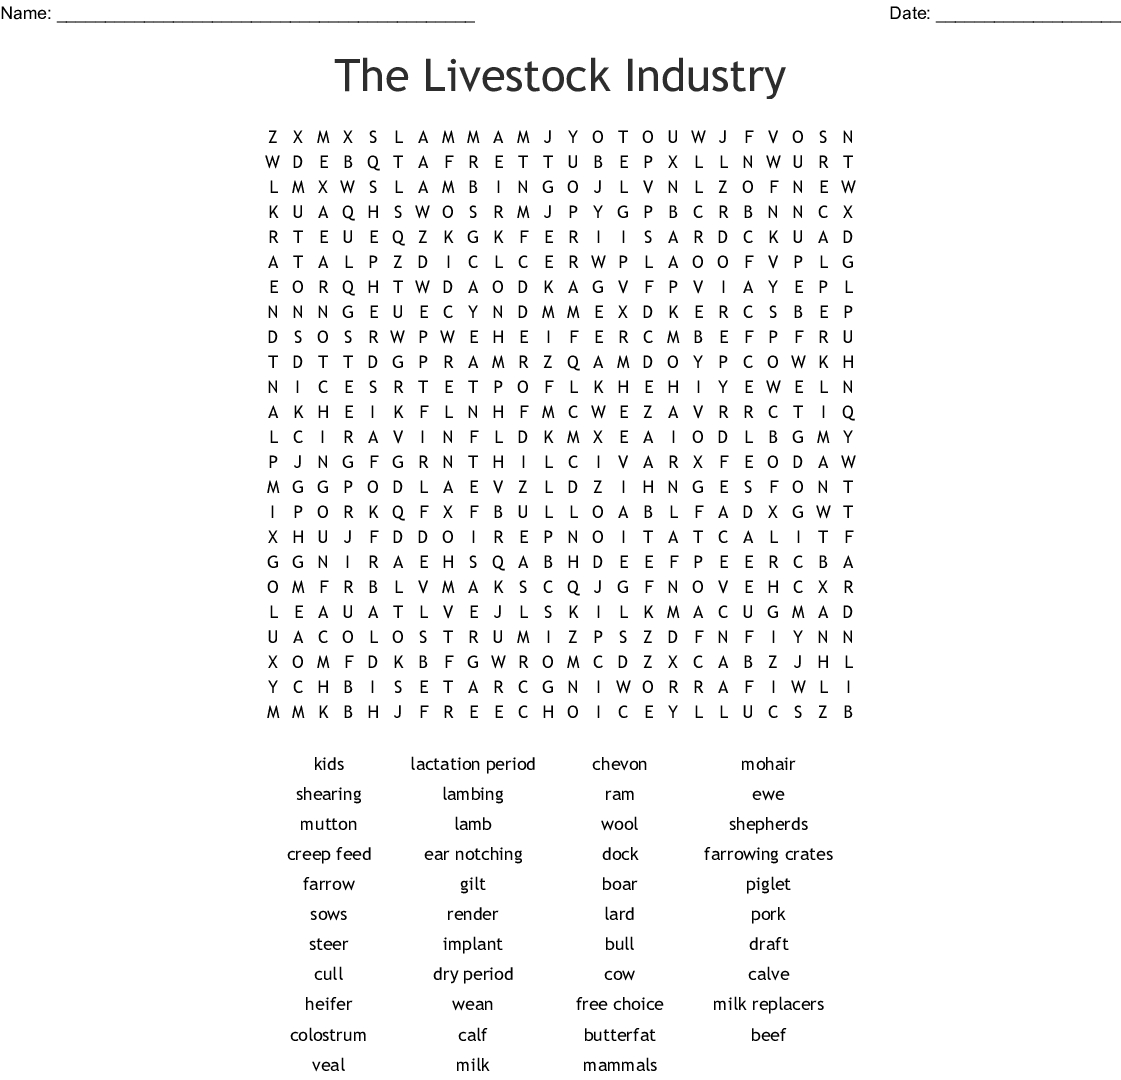 The Livestock Industry Student Worksheet